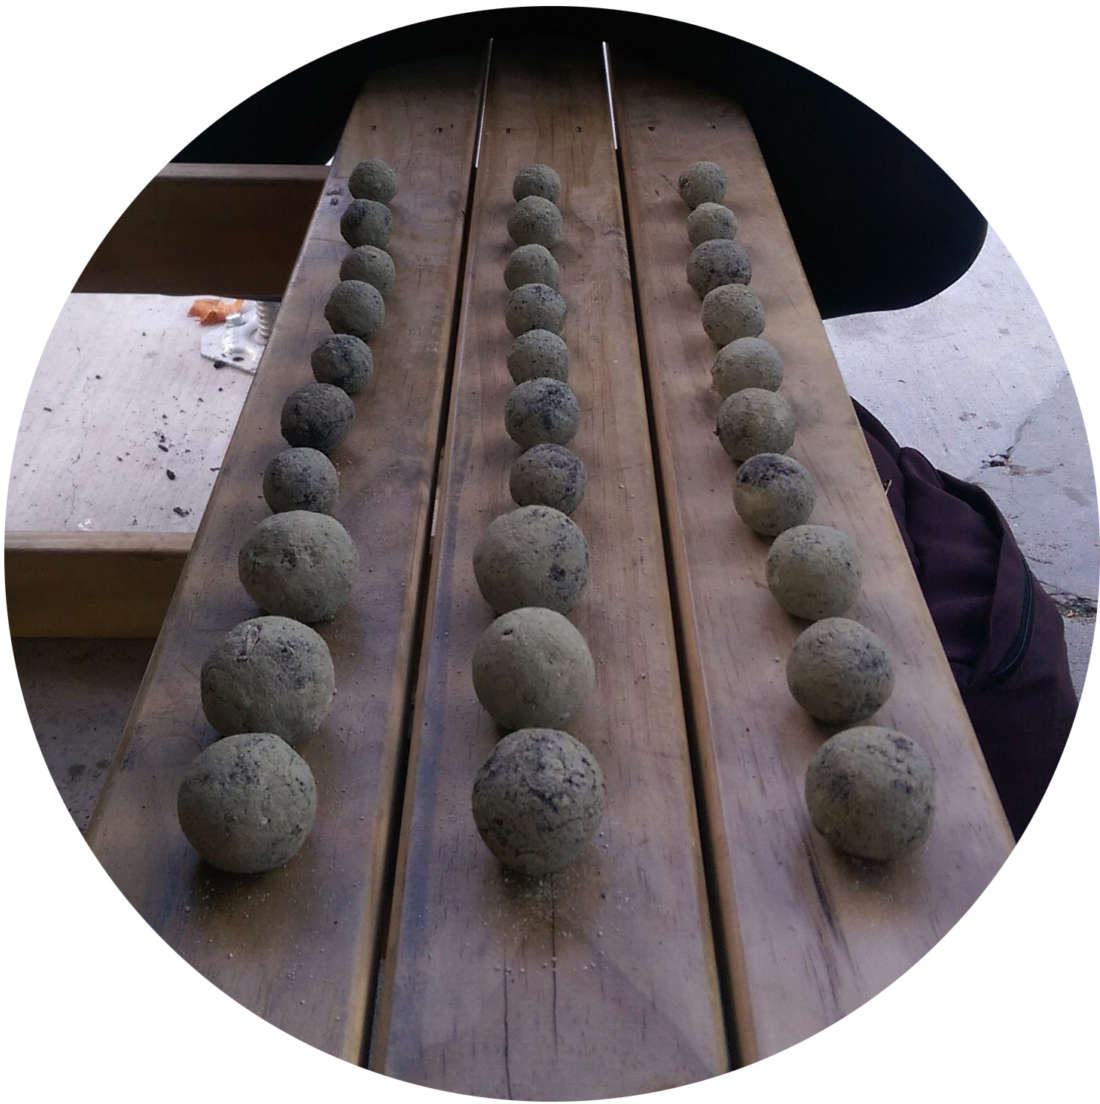 Clay seed balls – à la seed truffles